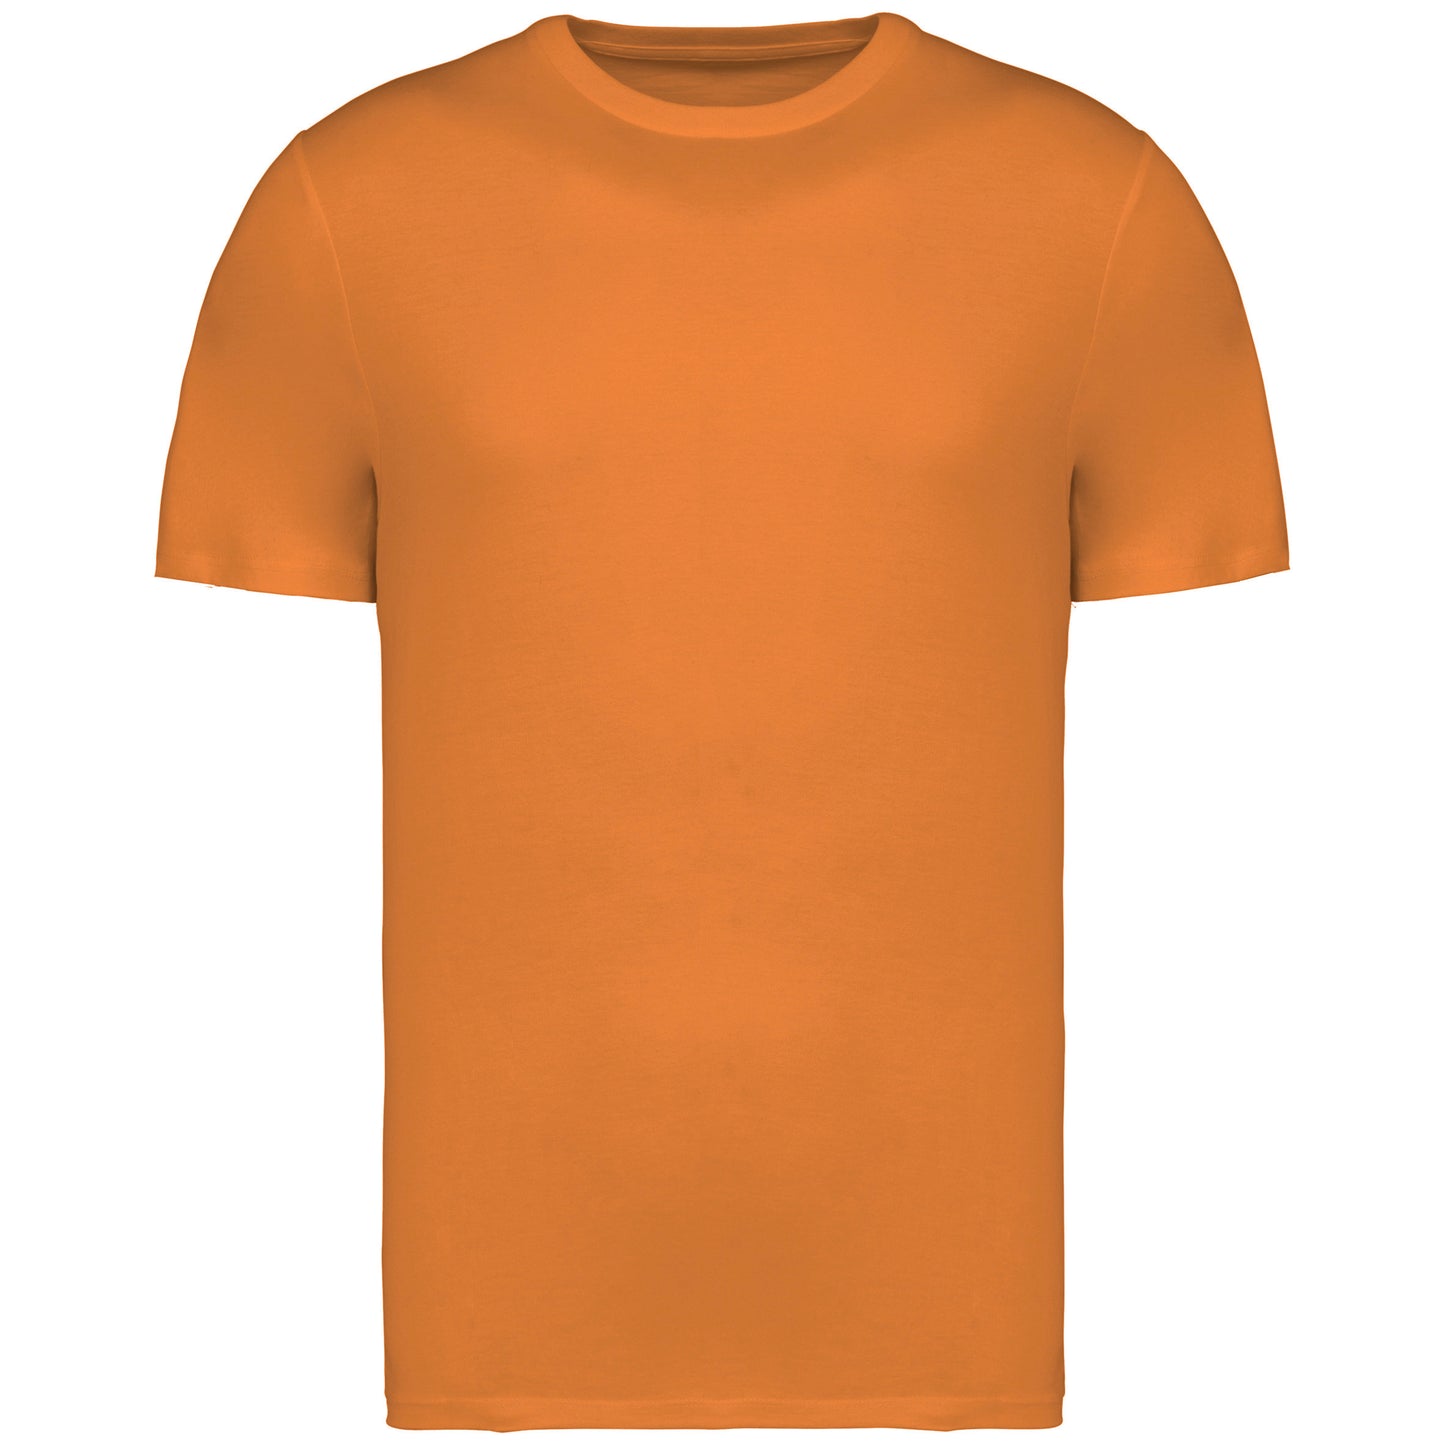 NS305 - T-shirt écoresponsable unisexe